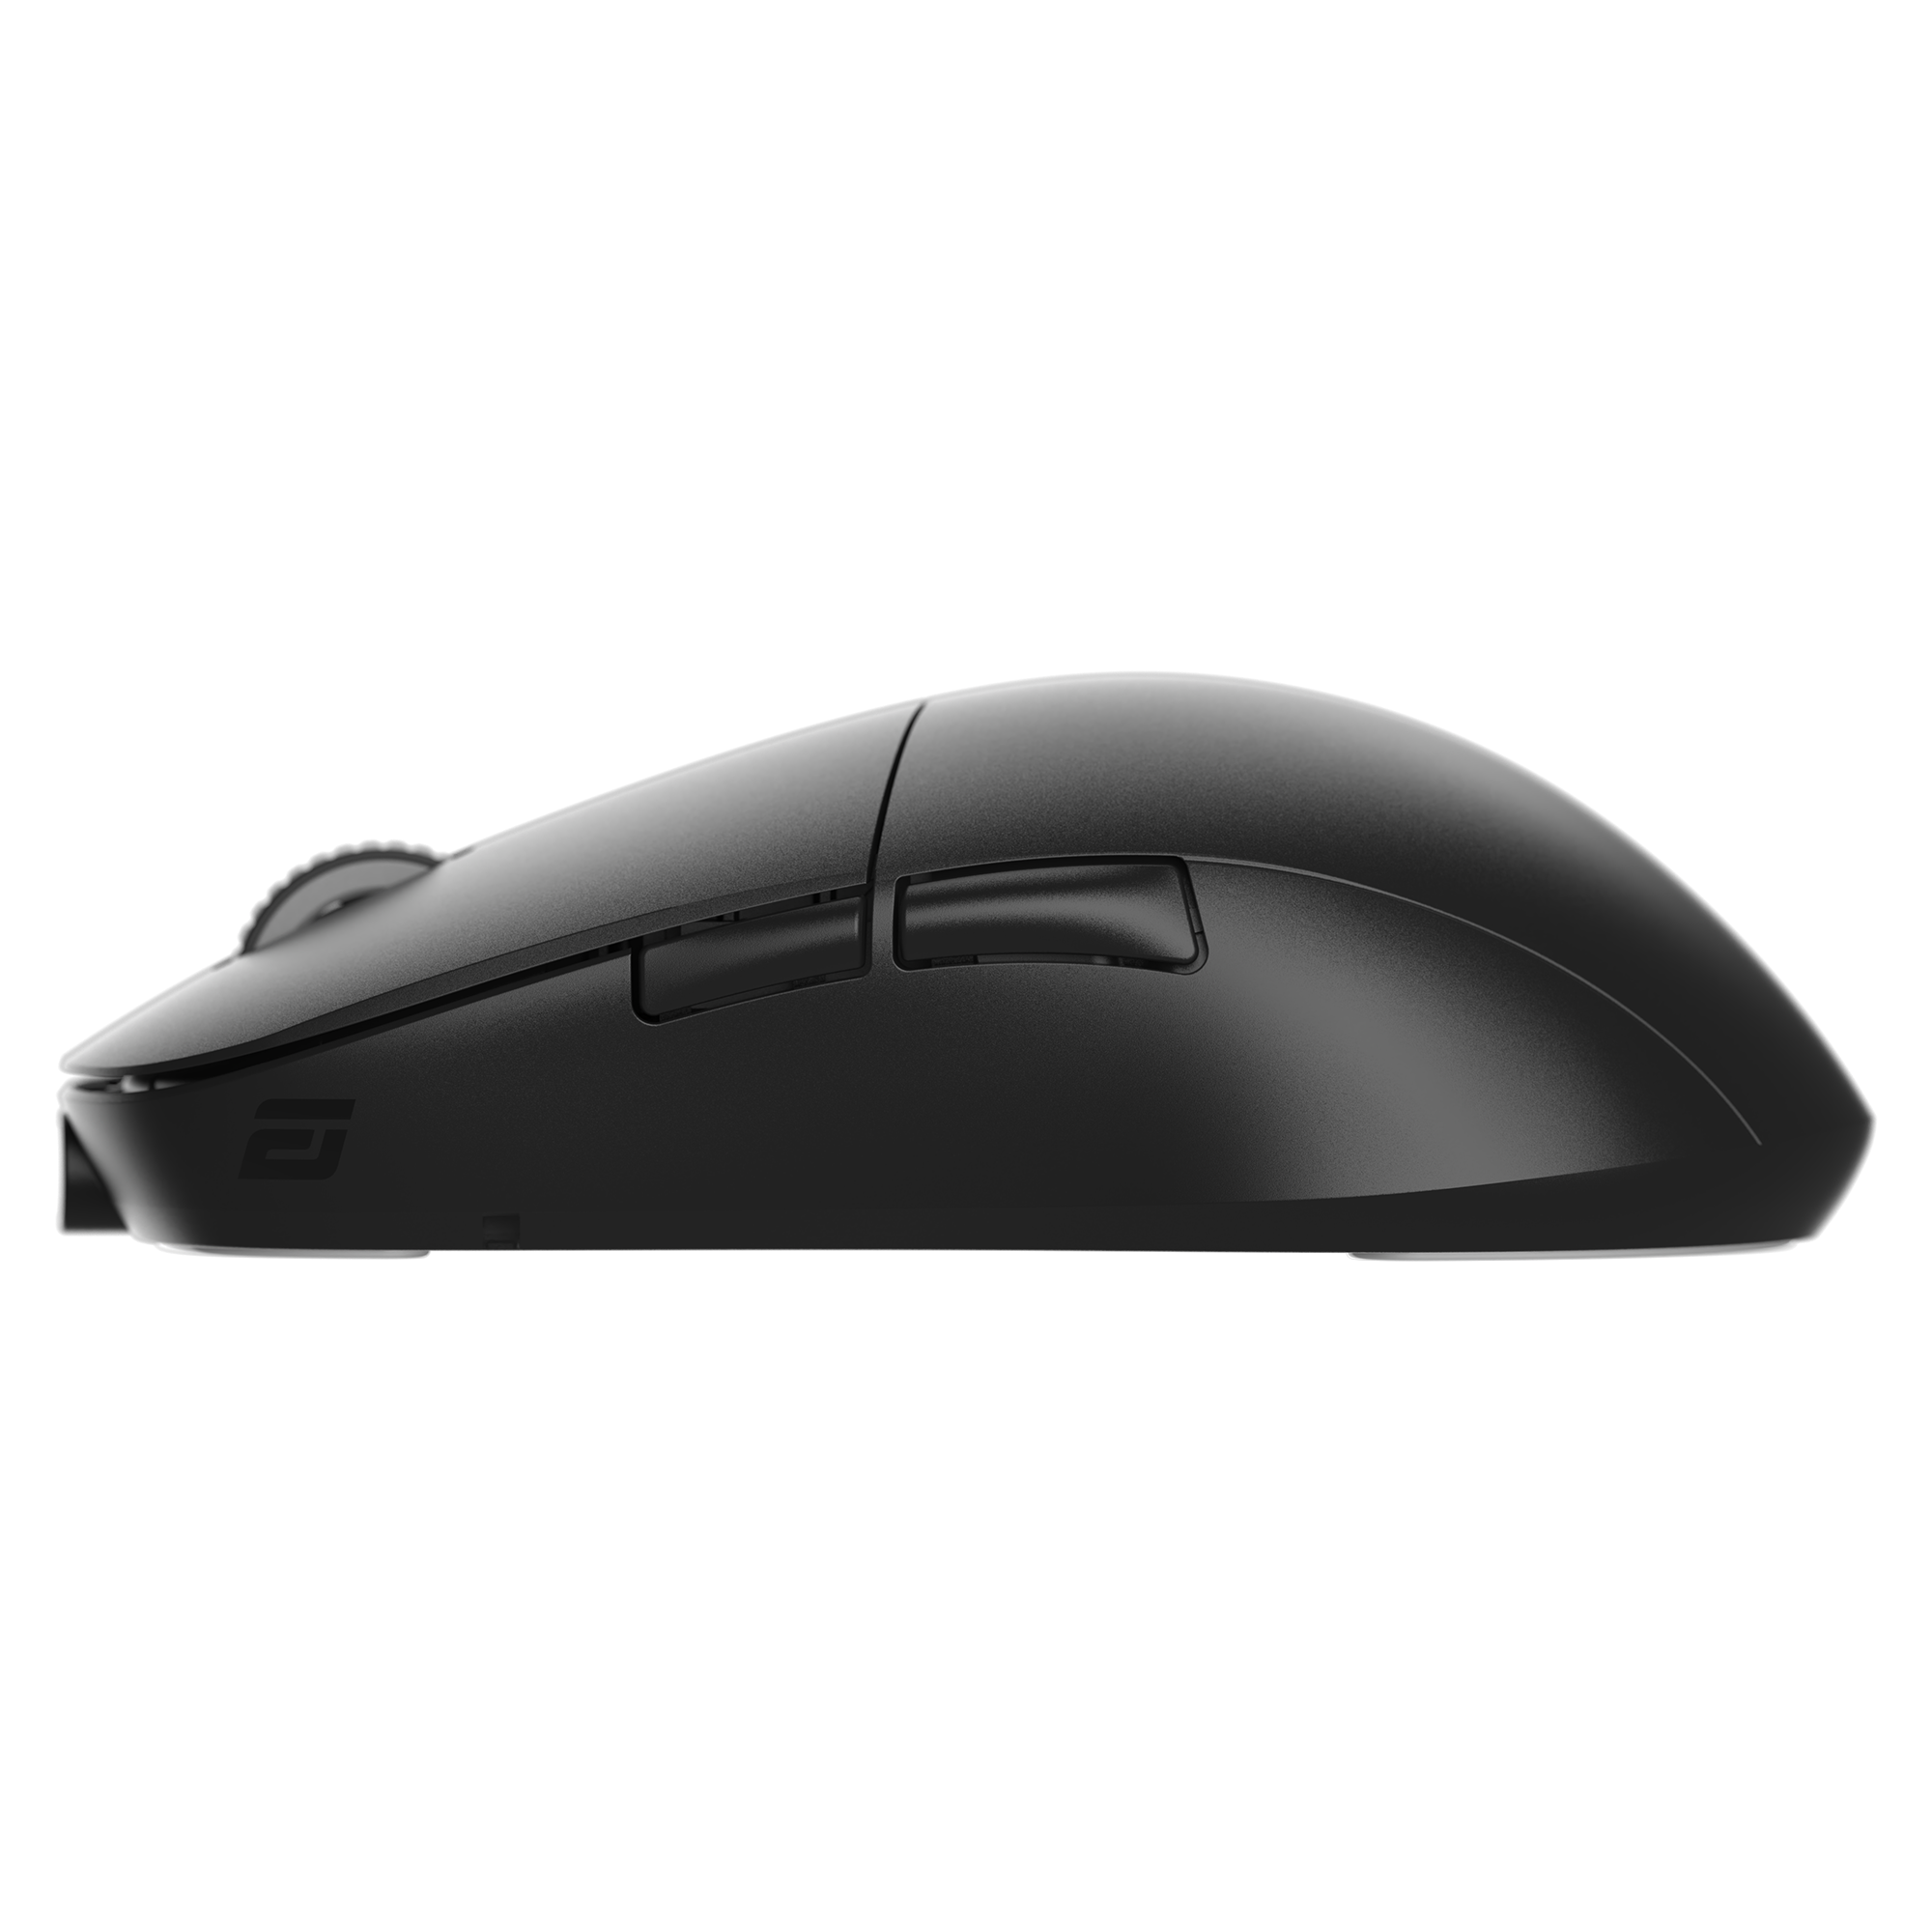 Endgame Gear - Endgame Gear XM2WE Wireless Optical Lightweight Gaming Mouse - Black (EGG-XM2WE-BLK)